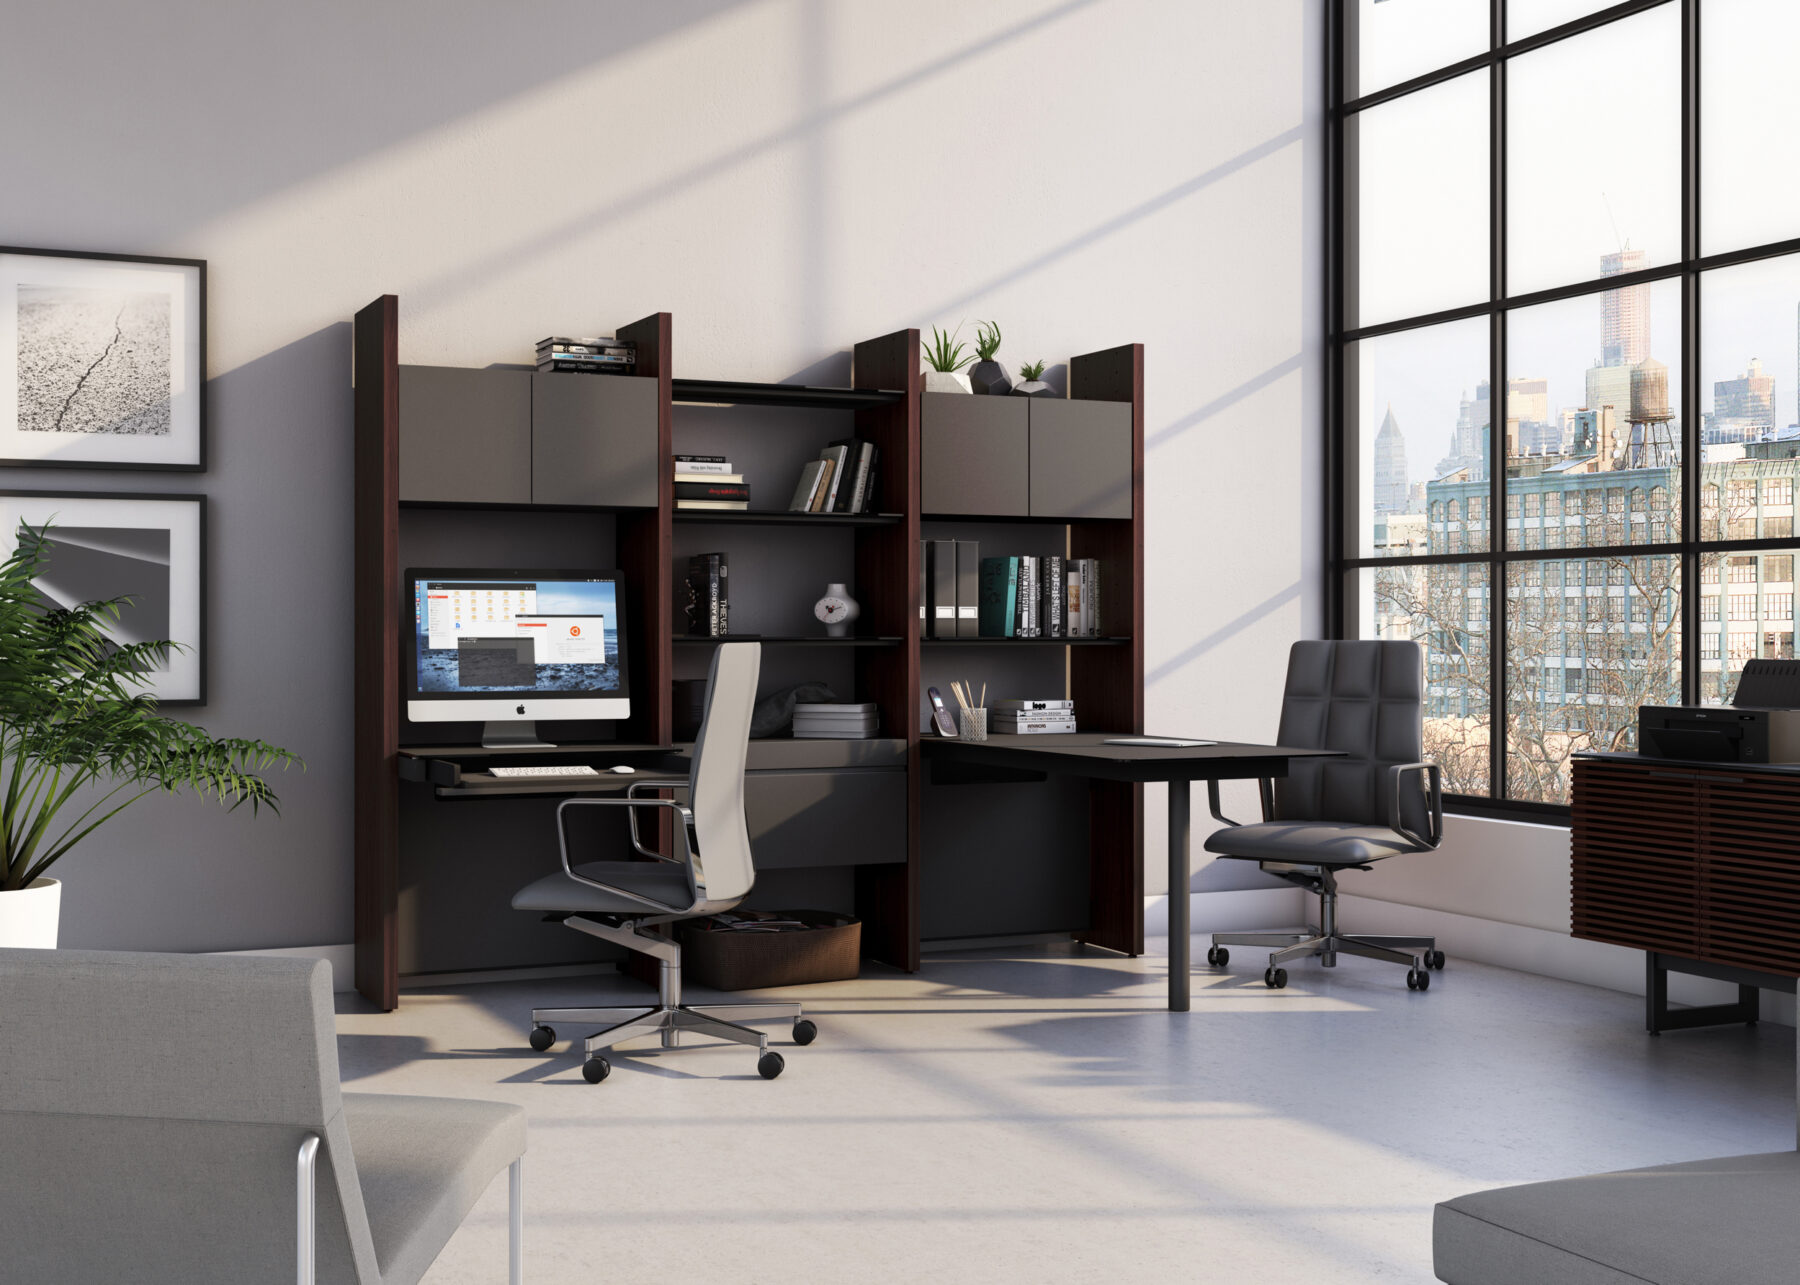 semblance-5431-PD-bdi-chocolate-modular-office-system-lifestyle-1